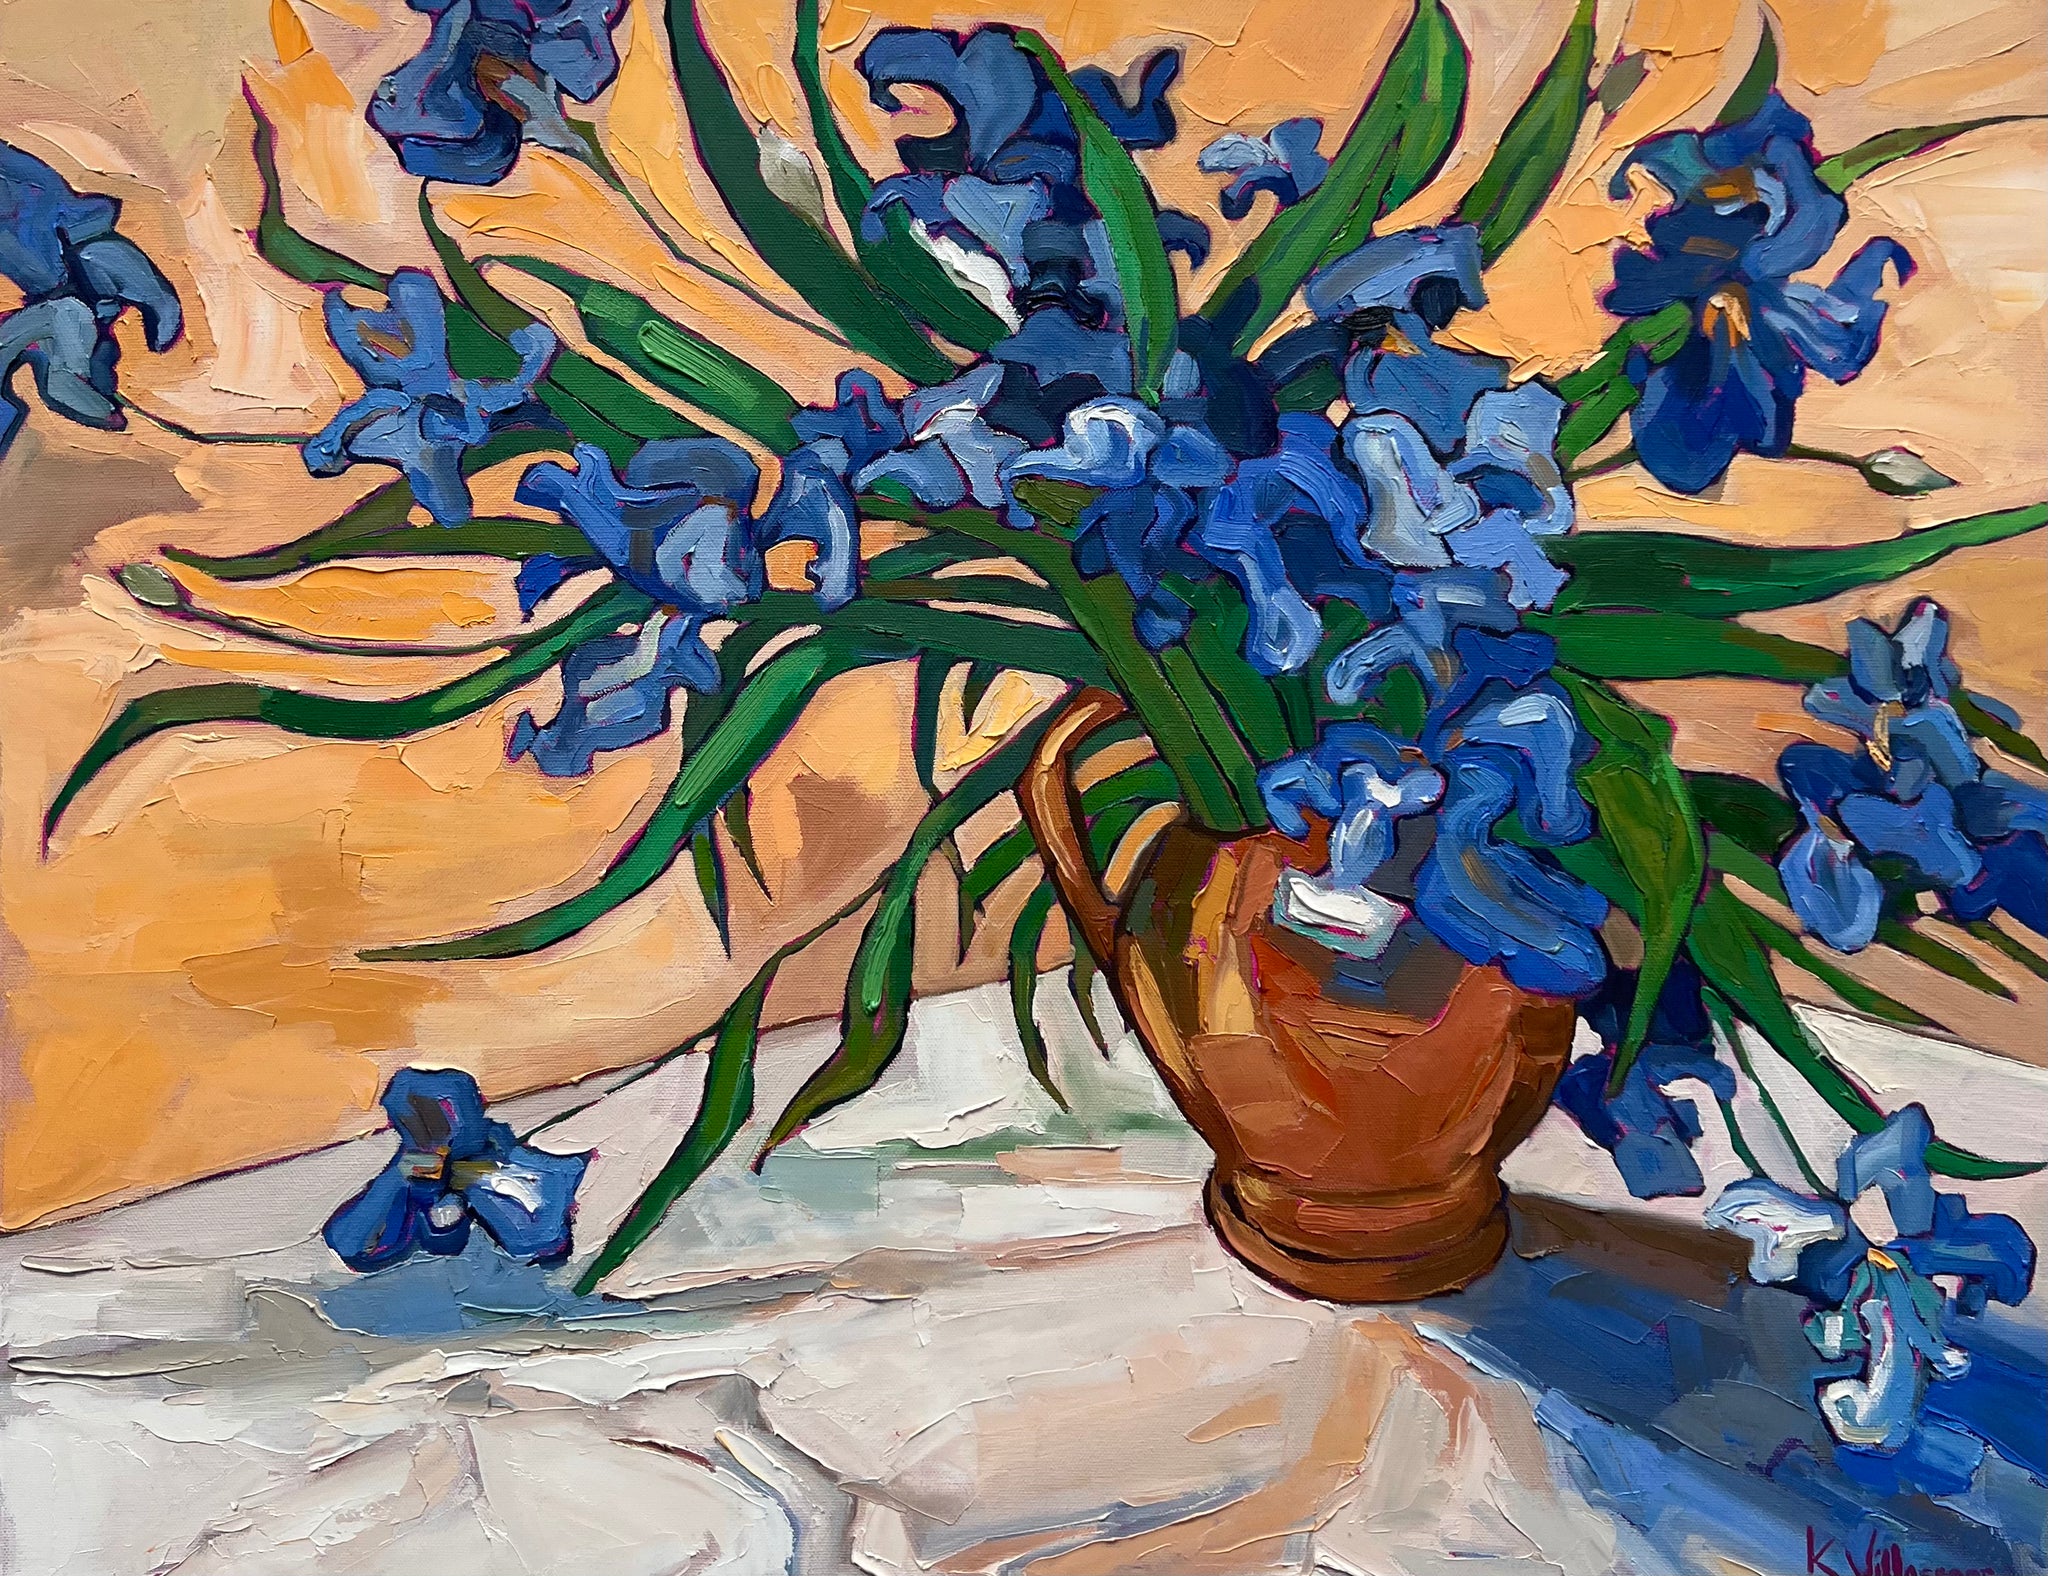 “Van Goghs Irises”